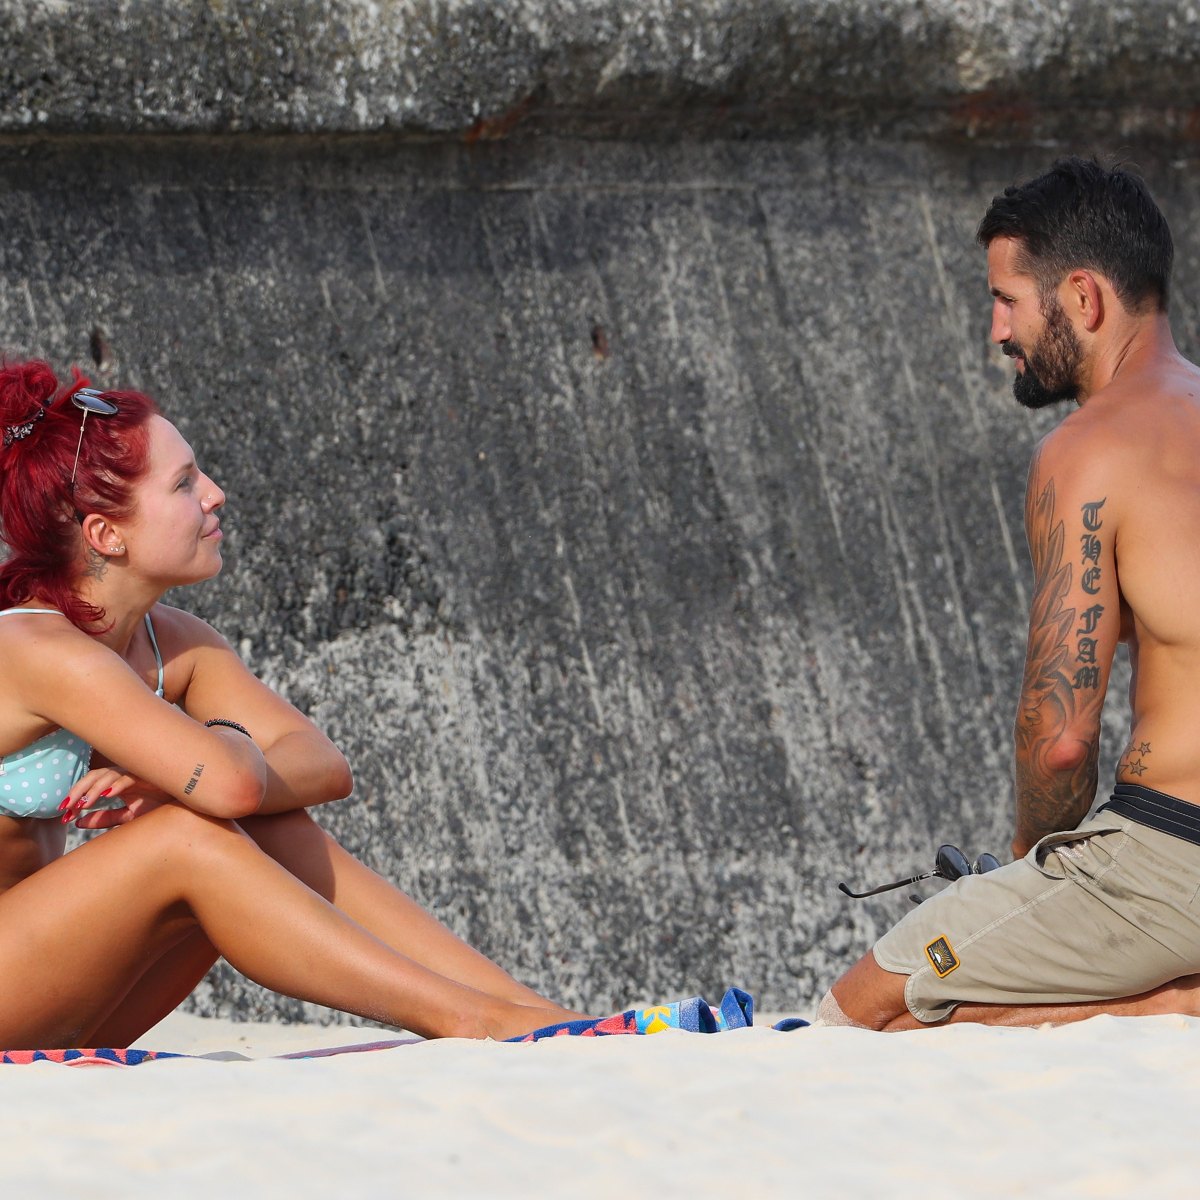 Topless Beach Flirting - Does 'DWTS' Pro Sharna Burgess Have a BF? She Flirted in a Bikini